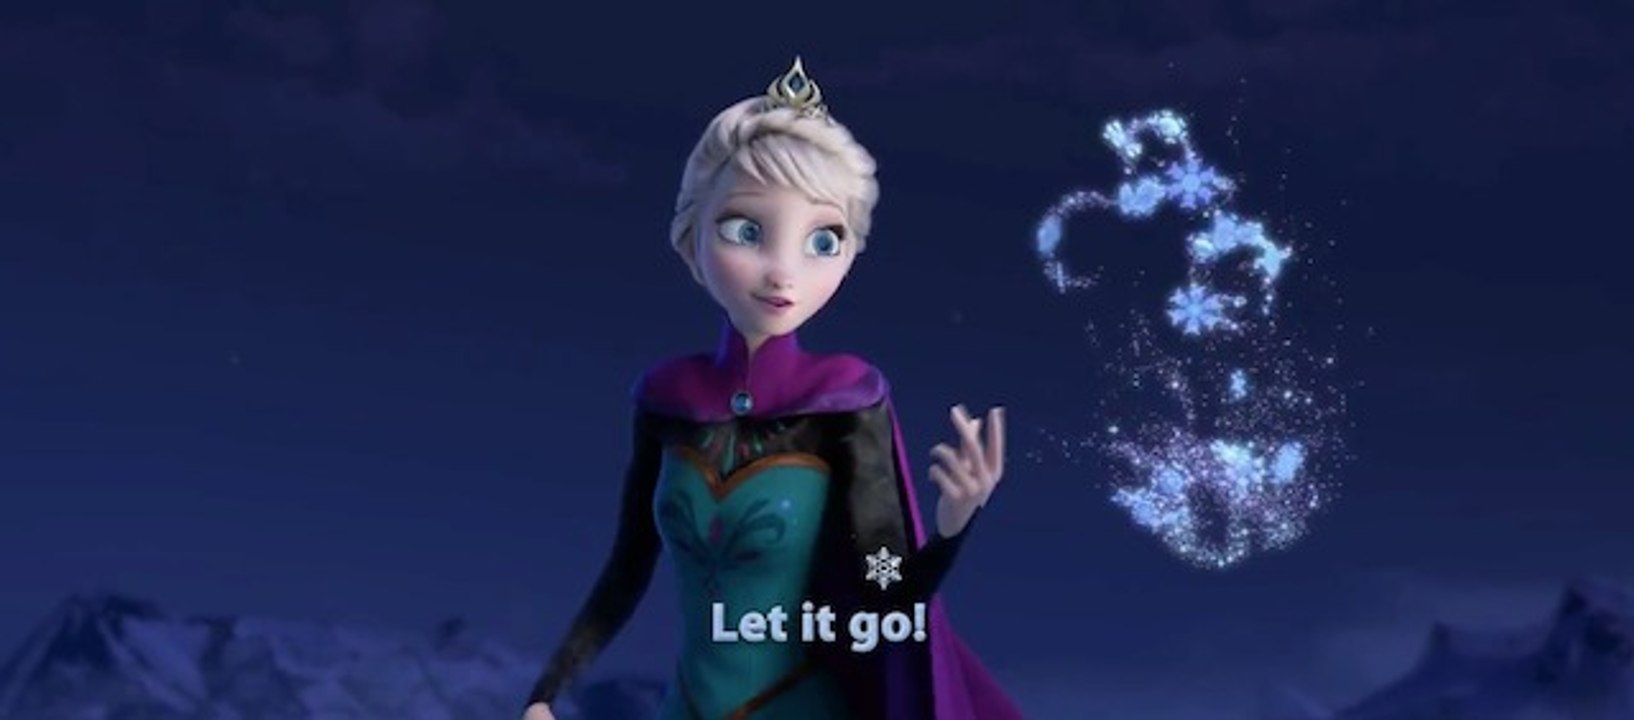 Disney's "Frozen" - "Let It Go" Sing-Along Version - video Dailymotion